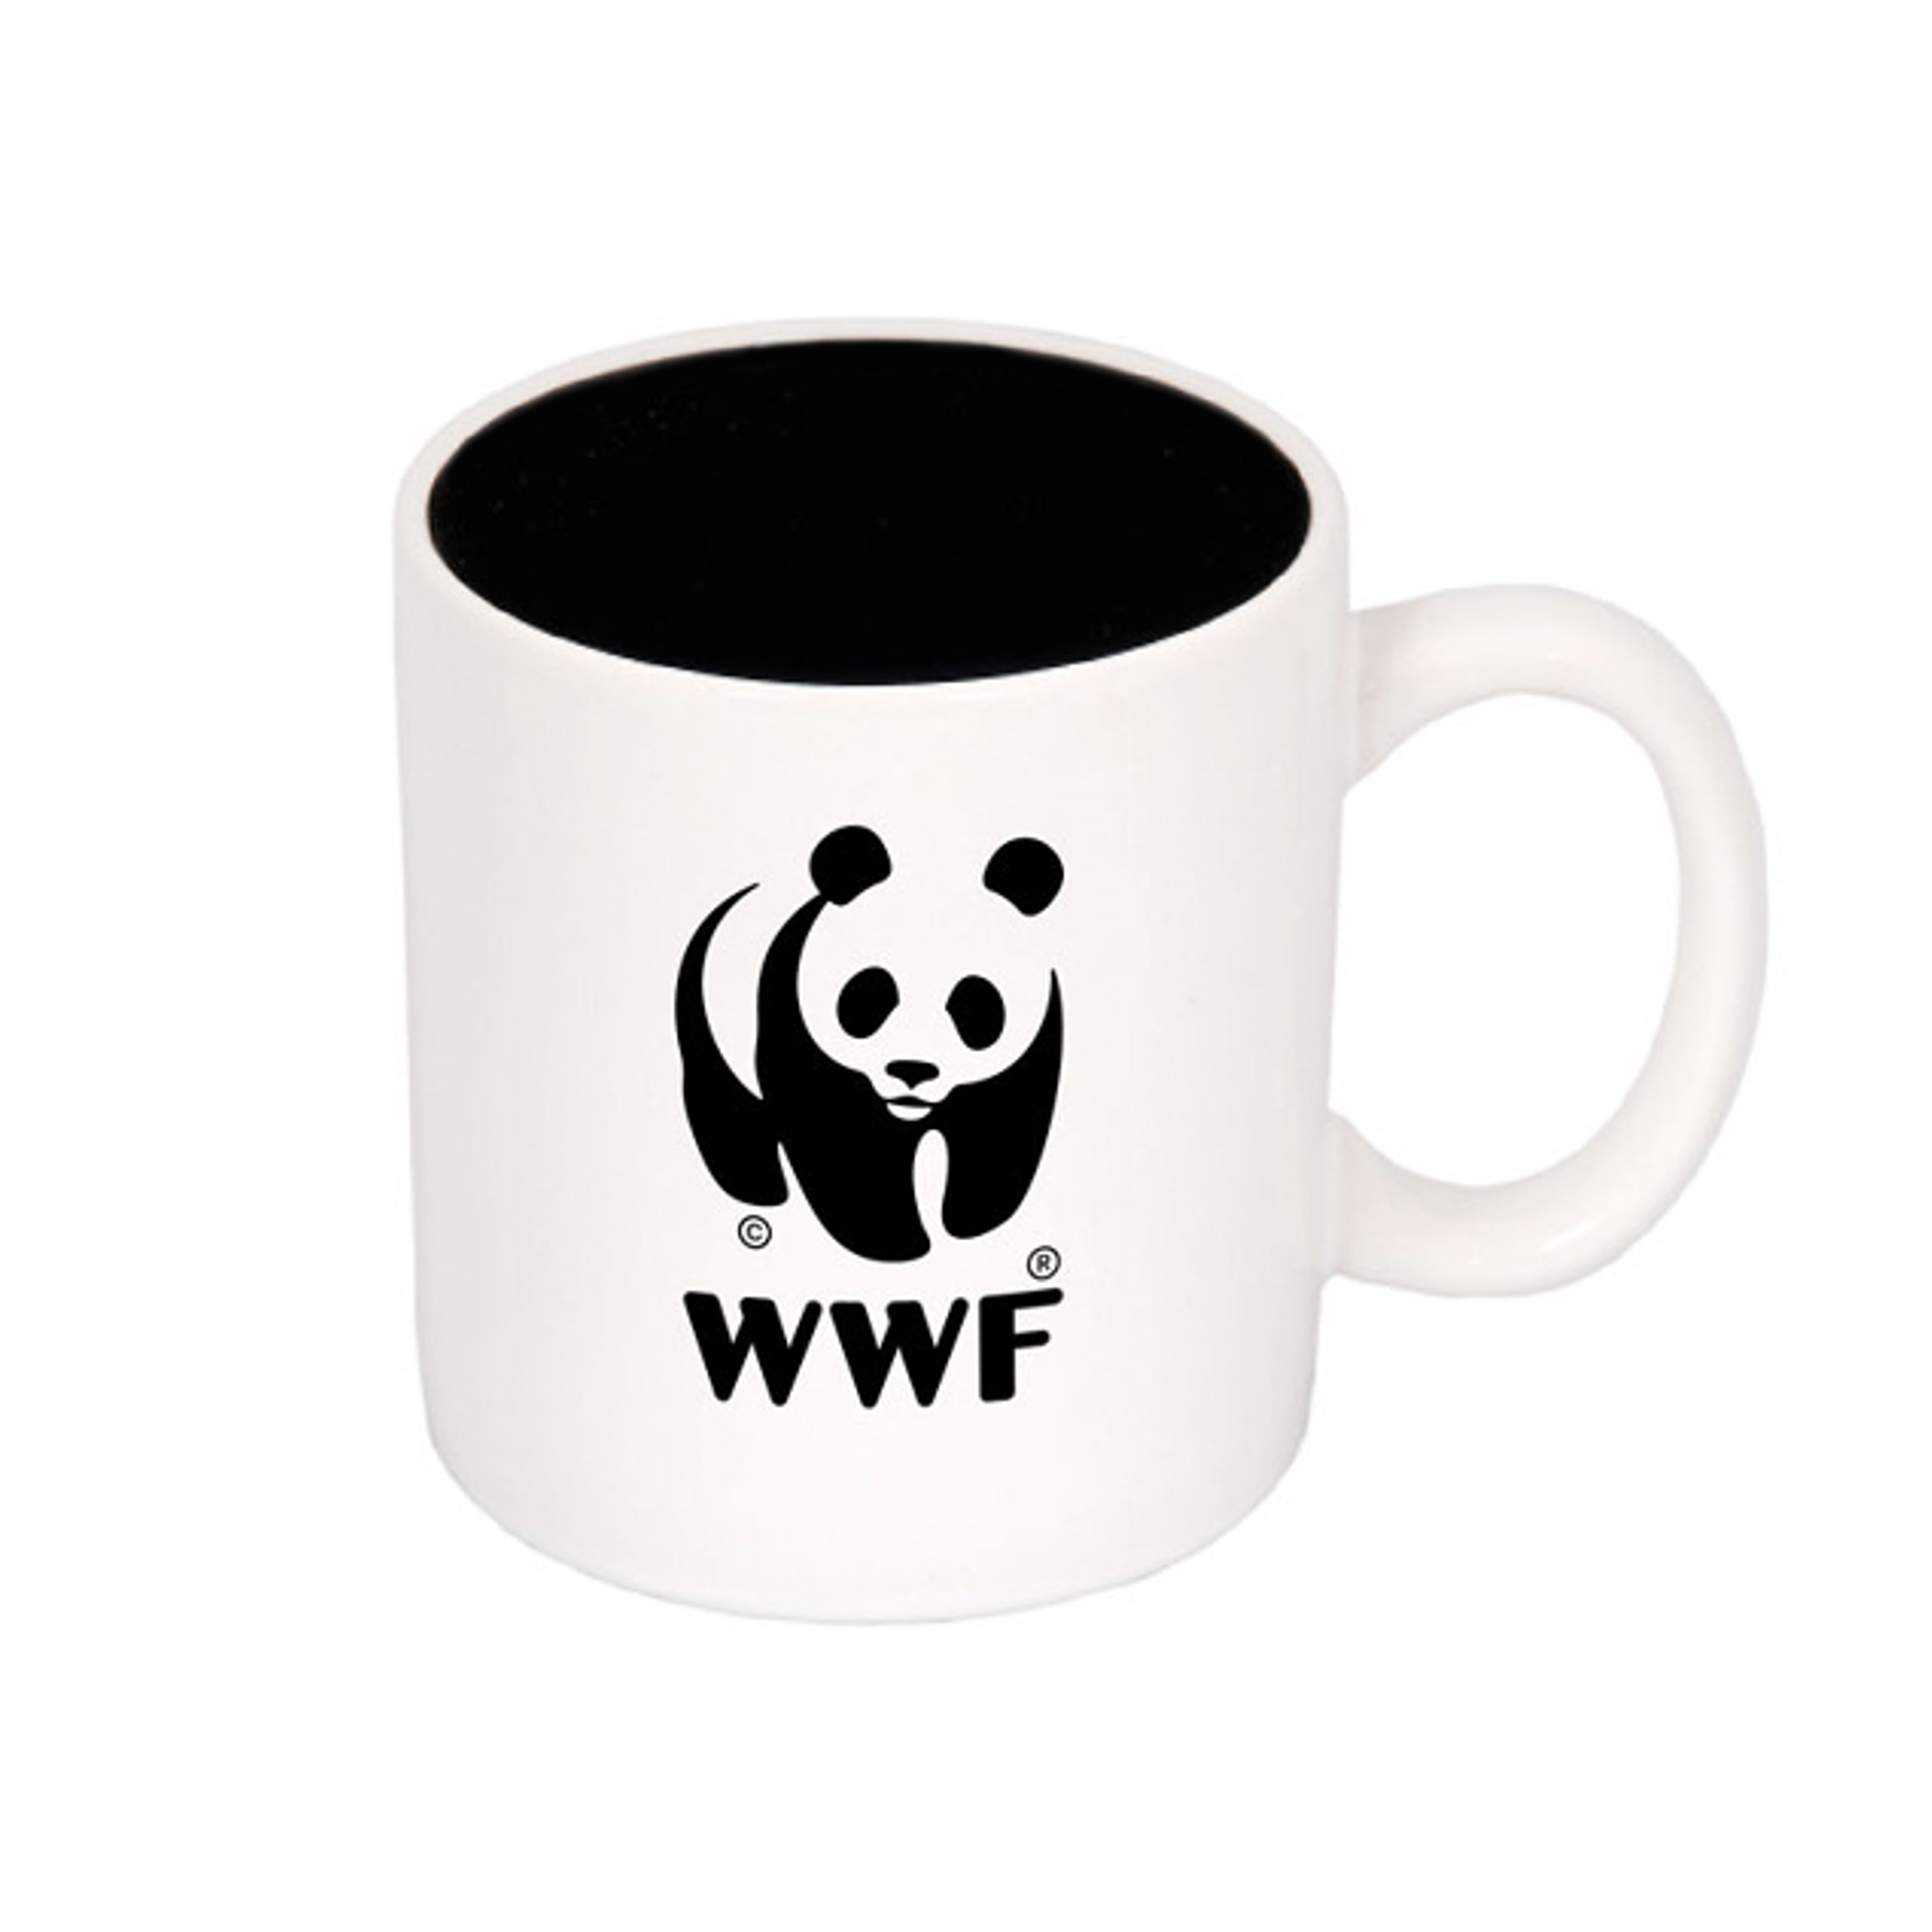 WWF white ceramic mug featuring the WWF panda logo on the front, center in black.